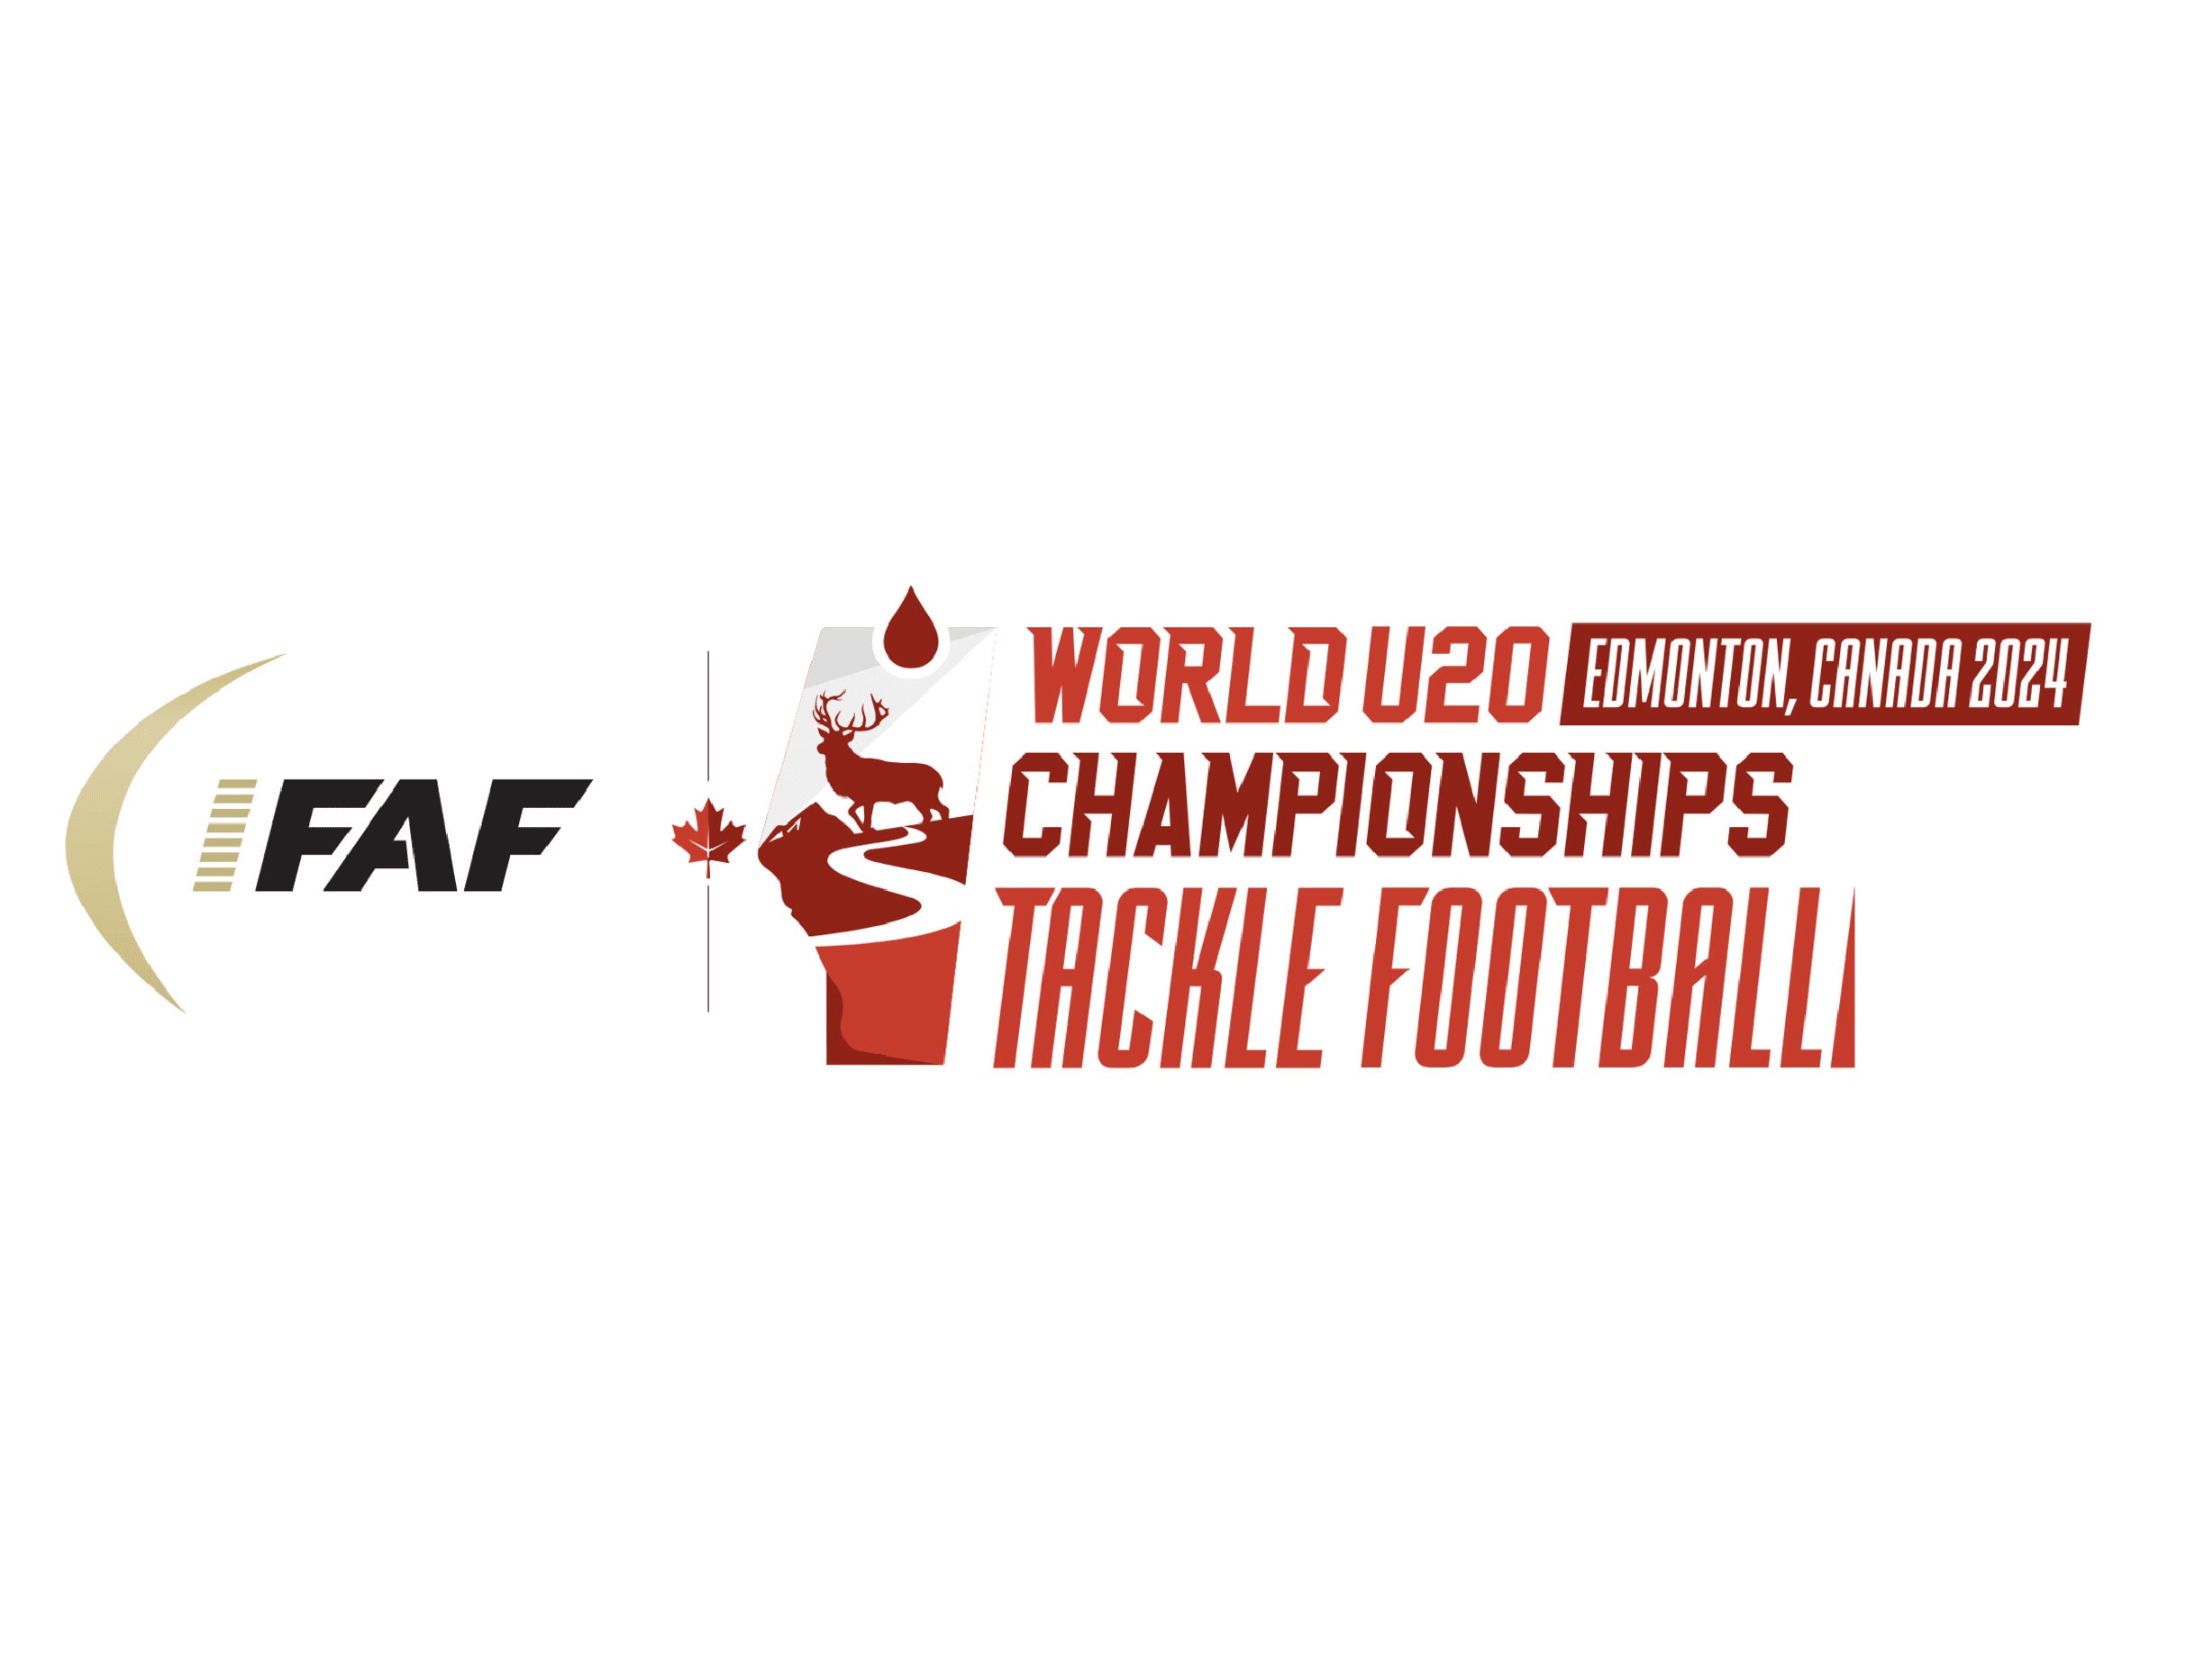 IFAF World U20 Tackle Football Championship - Canada Pass presale information on freepresalepasswords.com